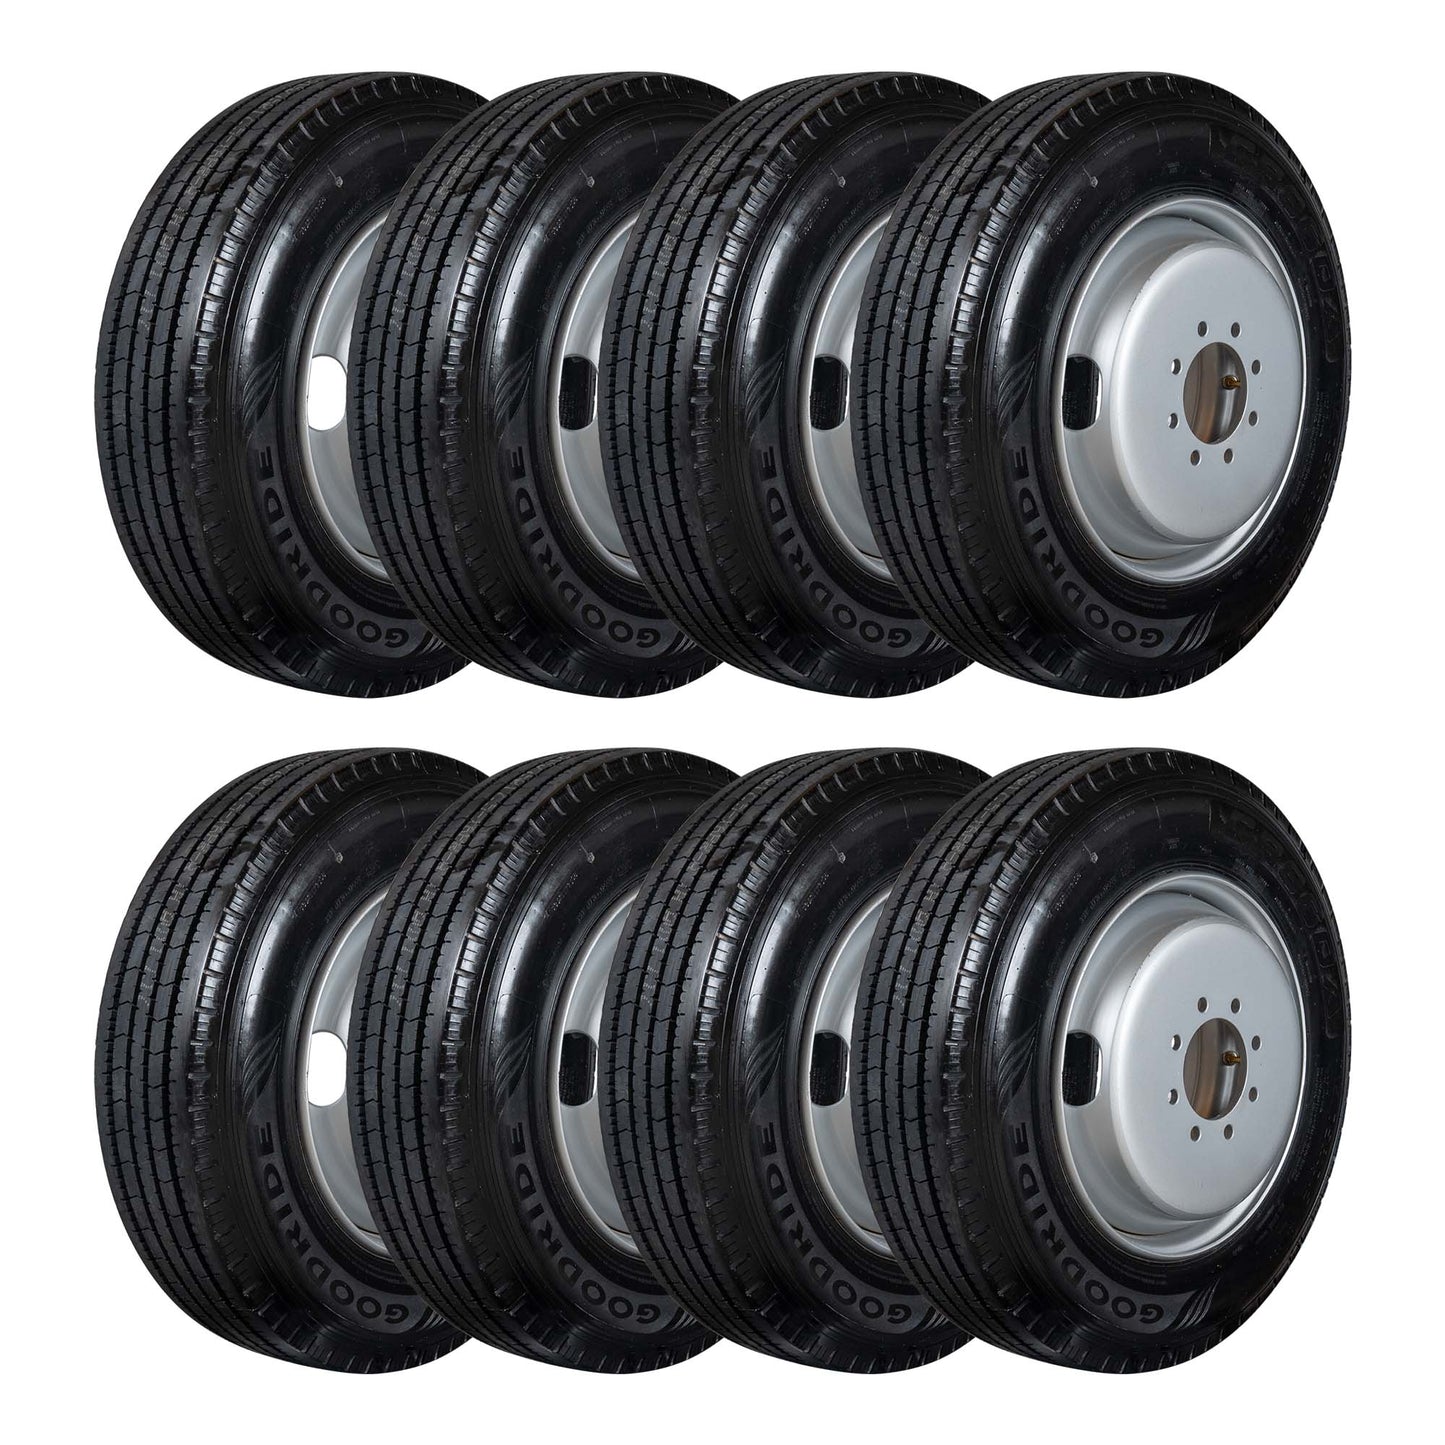 Goodride 17.5" 16 ply Radial Trailer Tire & Wheel - ST 215/75R17.5 8 Lug (Silver Dual)